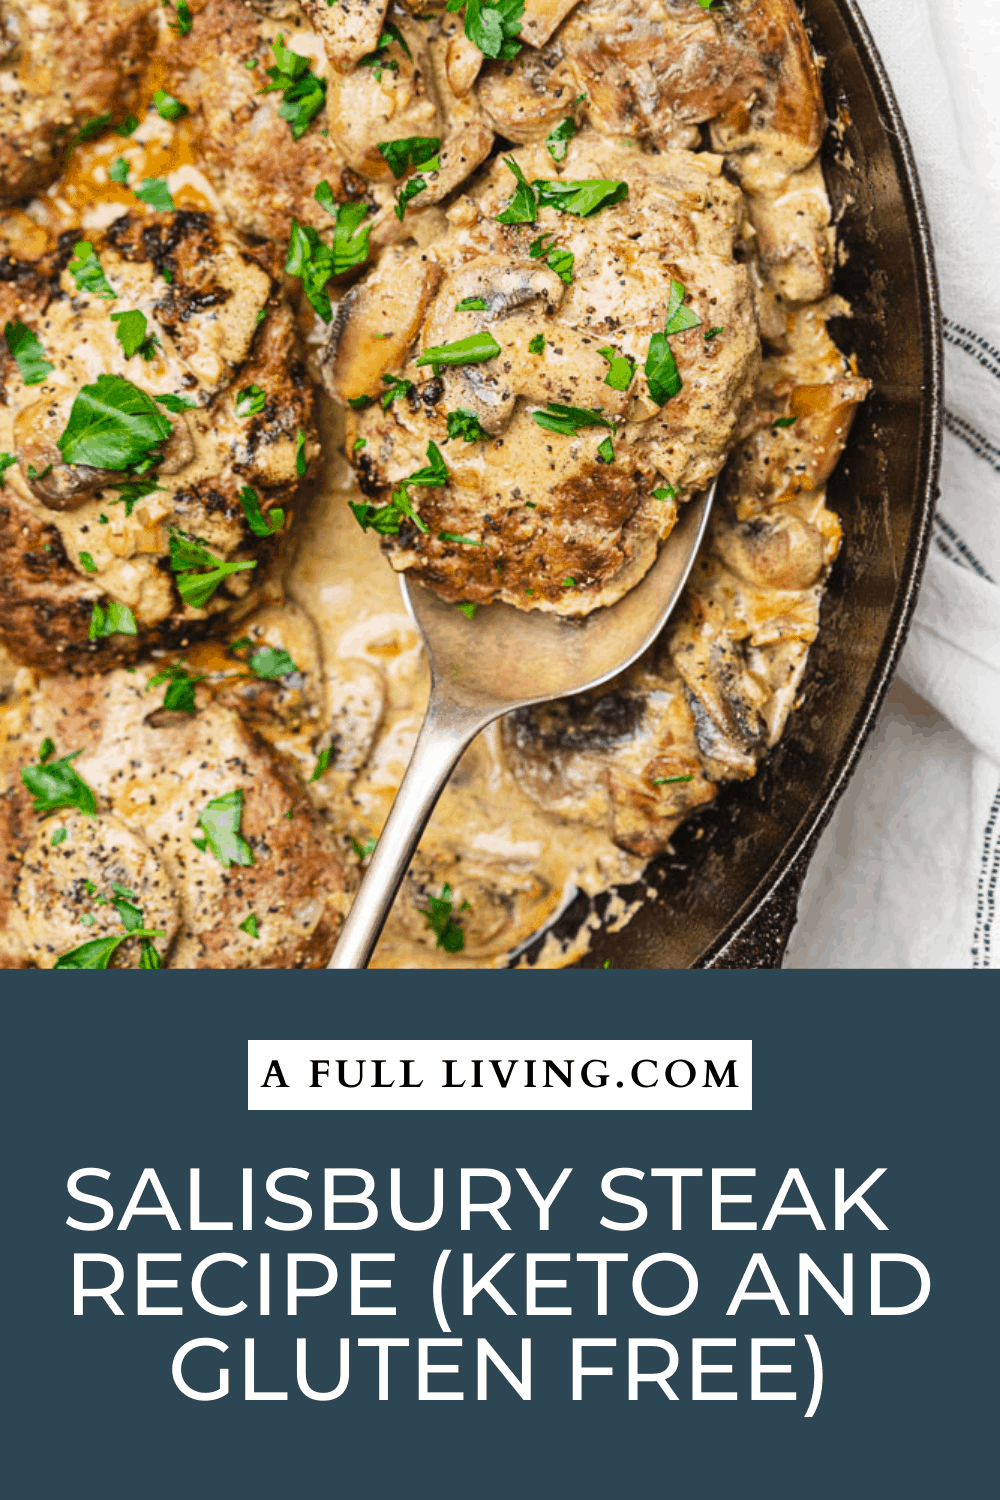 Salisbury Steak Recipe keto and gluten free graphic with text